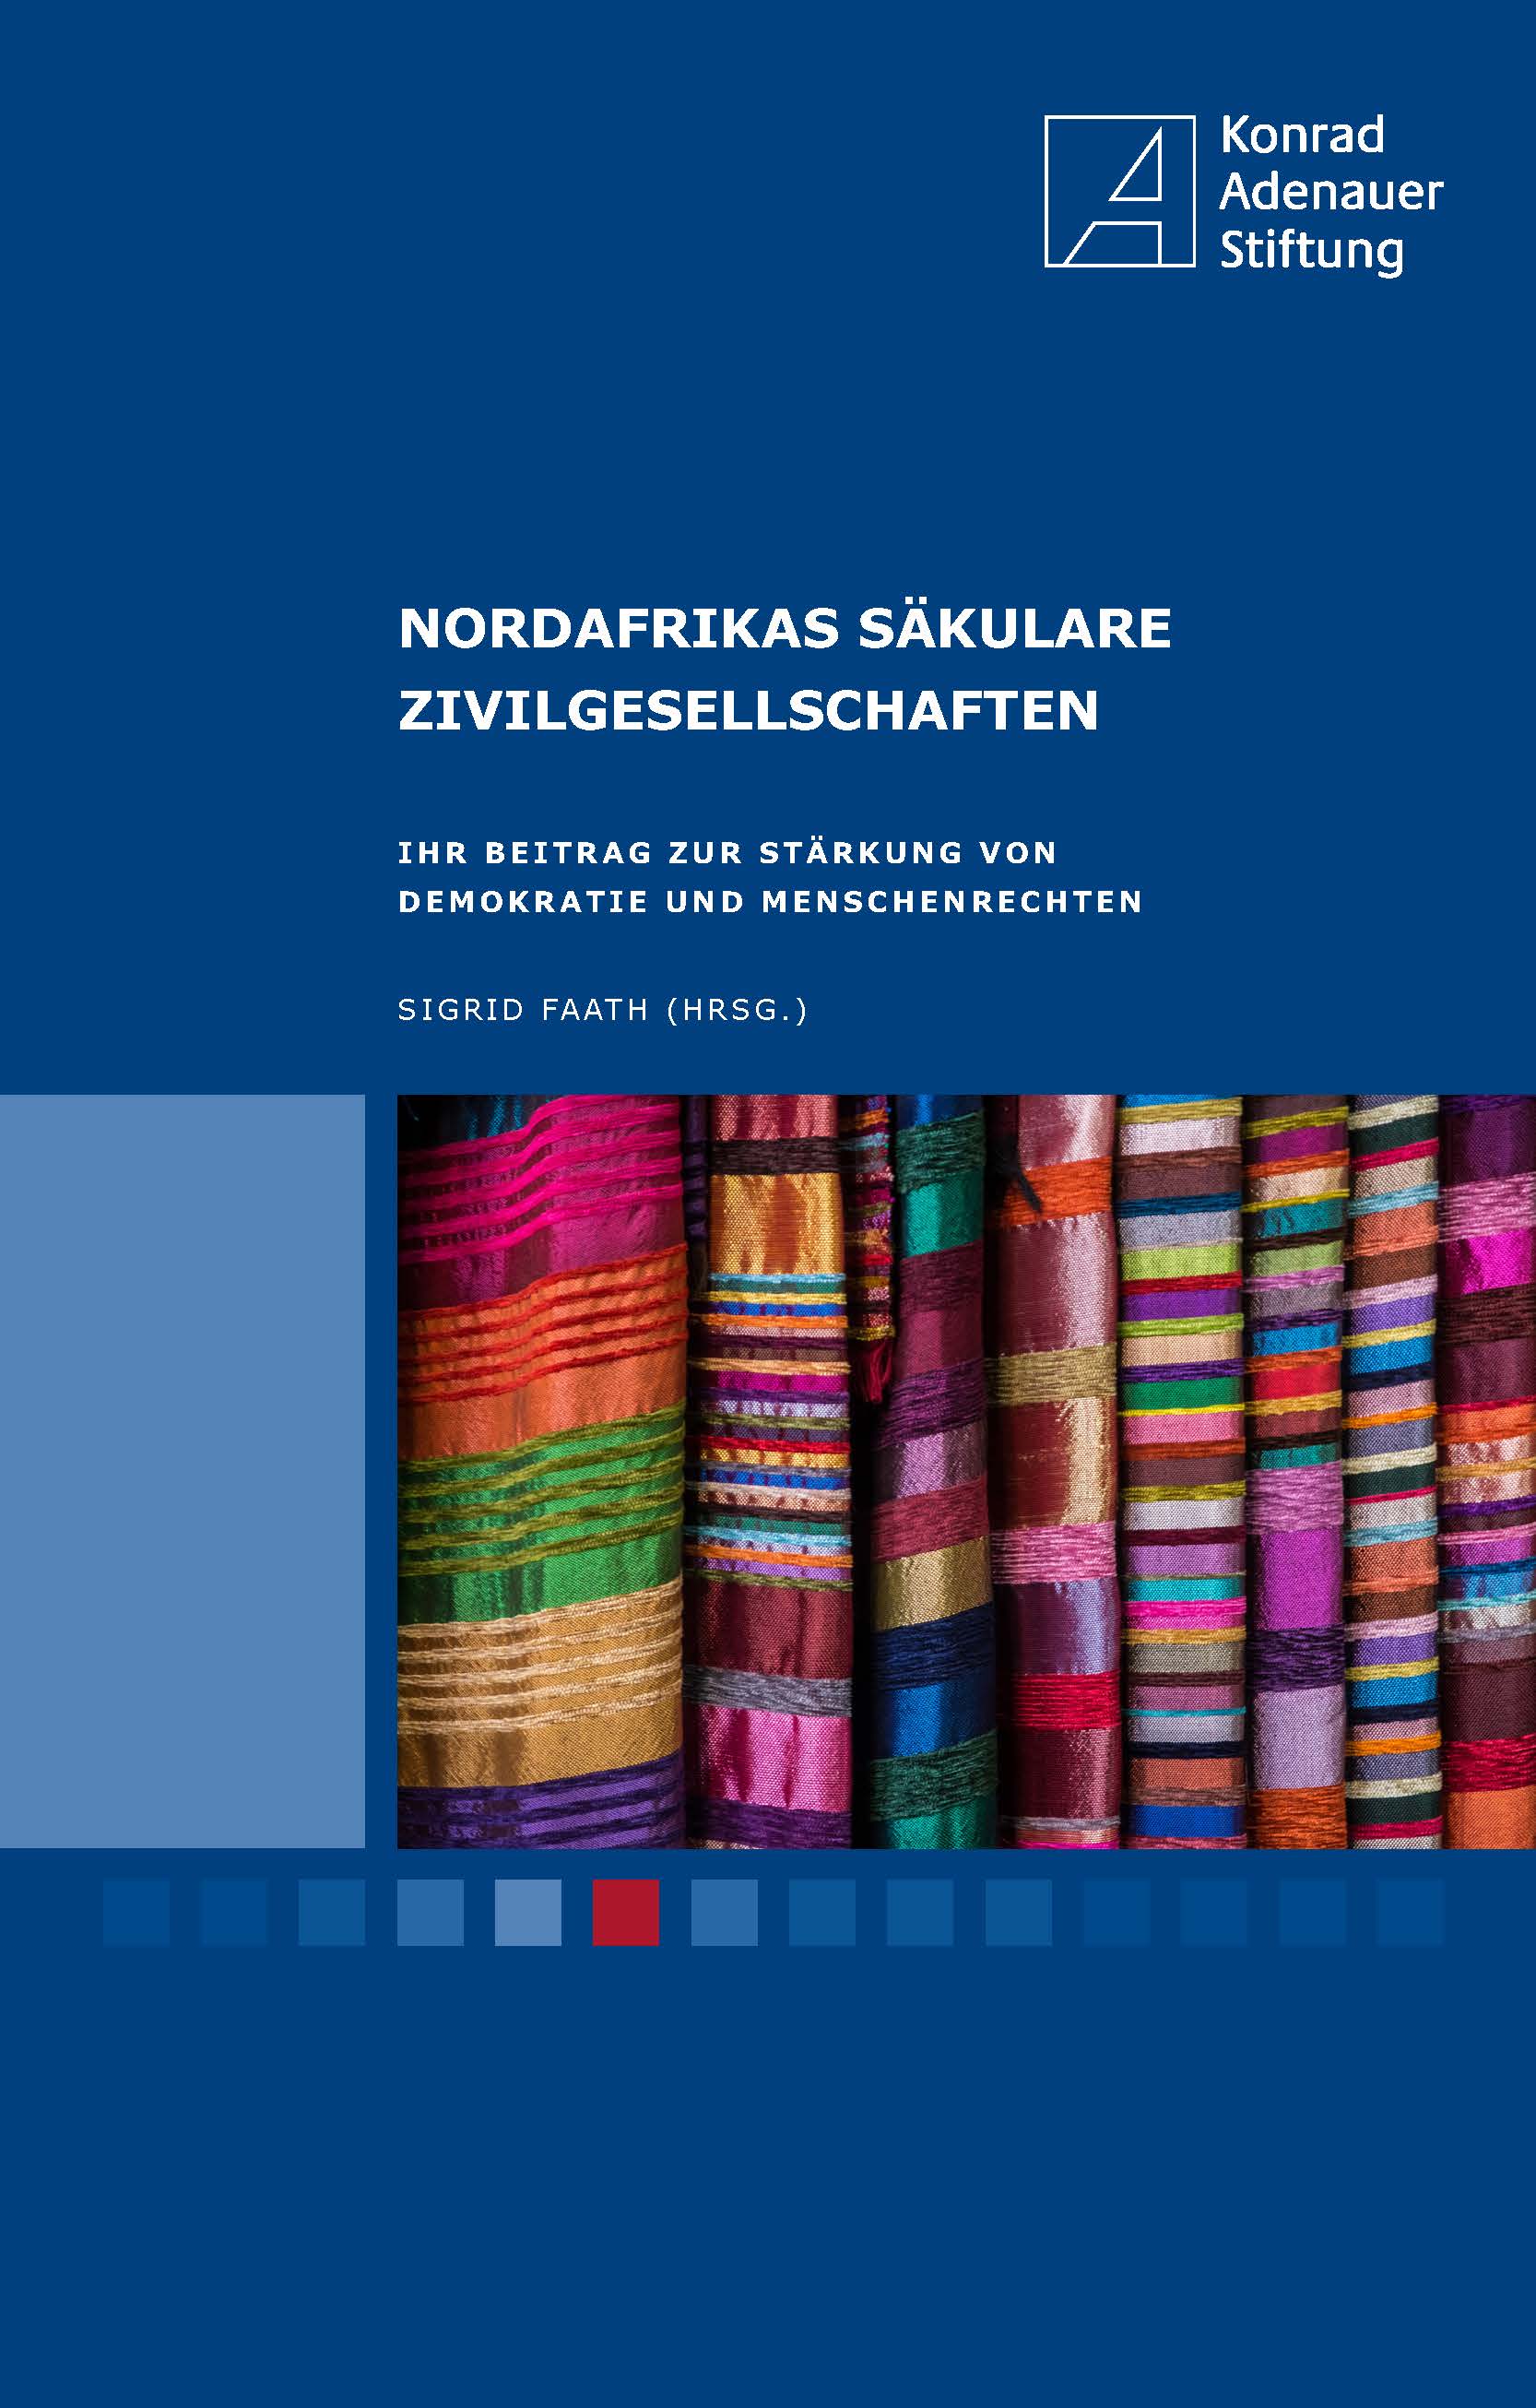 Sigrid Faath (Hrsg.), Nordafrikas säkulare Zivilgesellschaften. Konrad Adenauer Stiftung